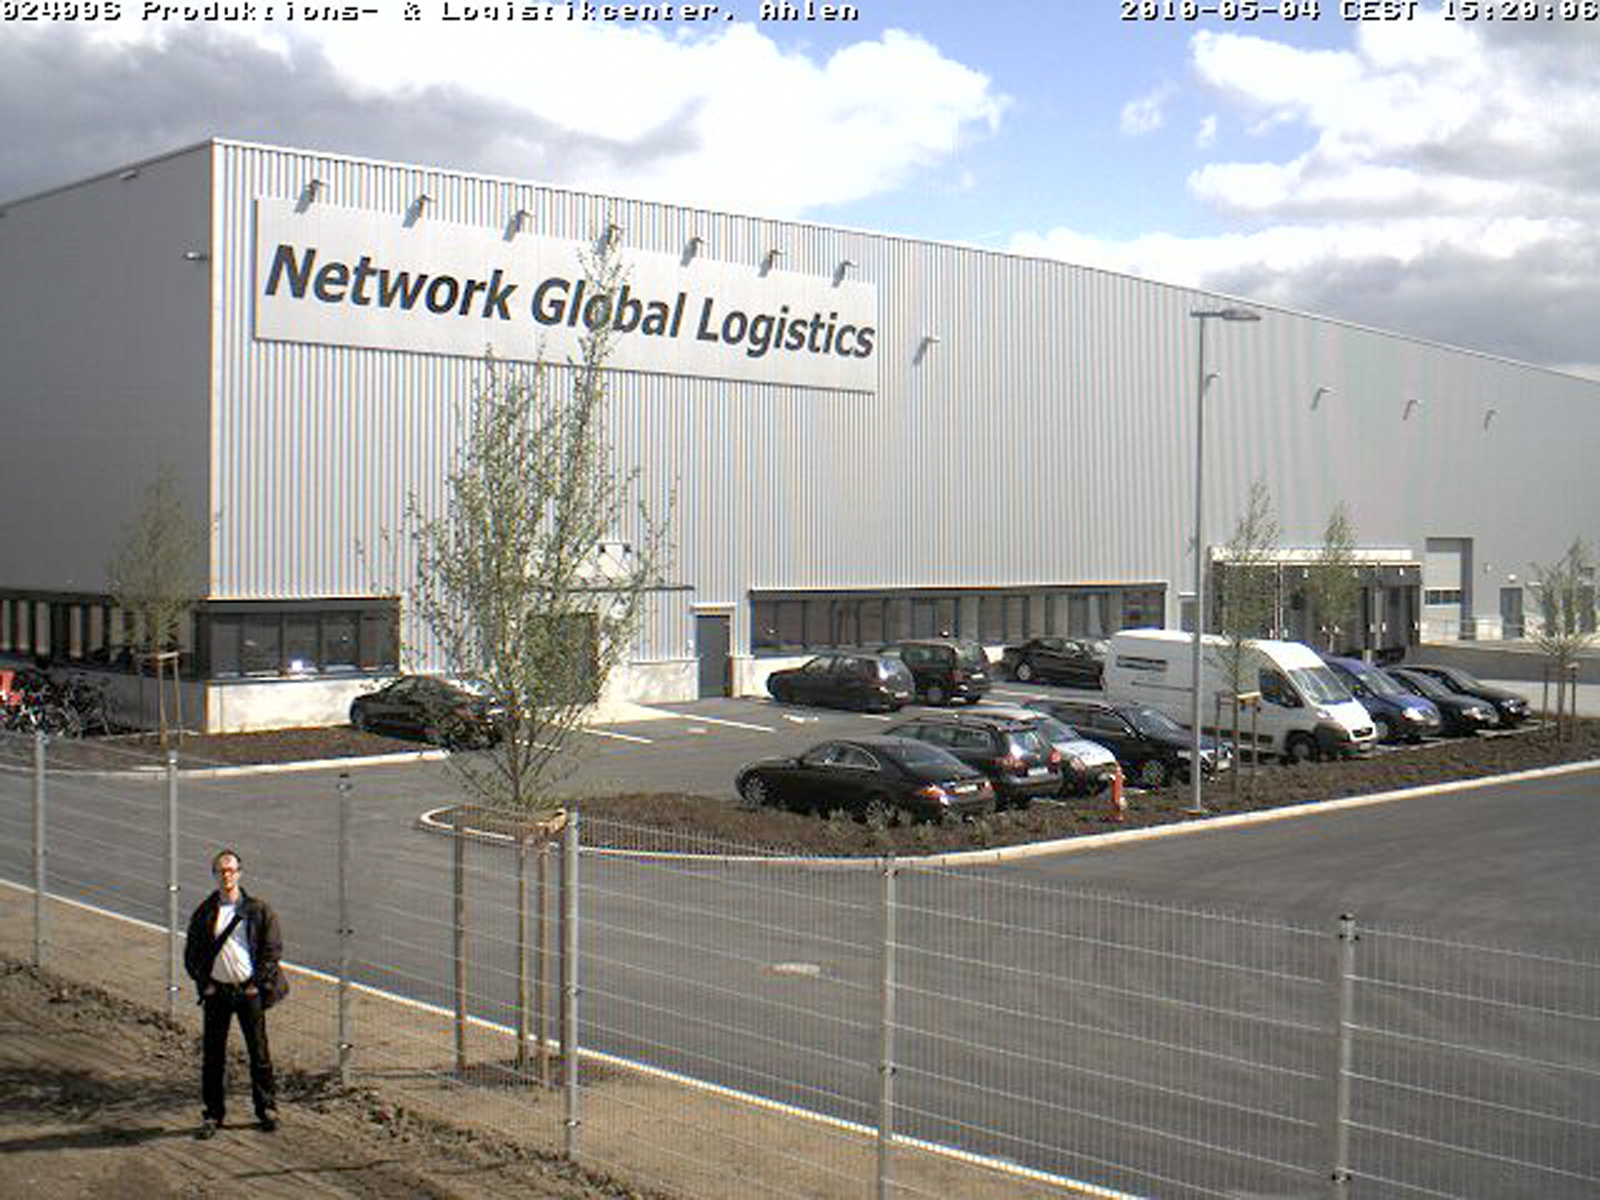 Network Global Logistics, Ahlen, Germany, 2010